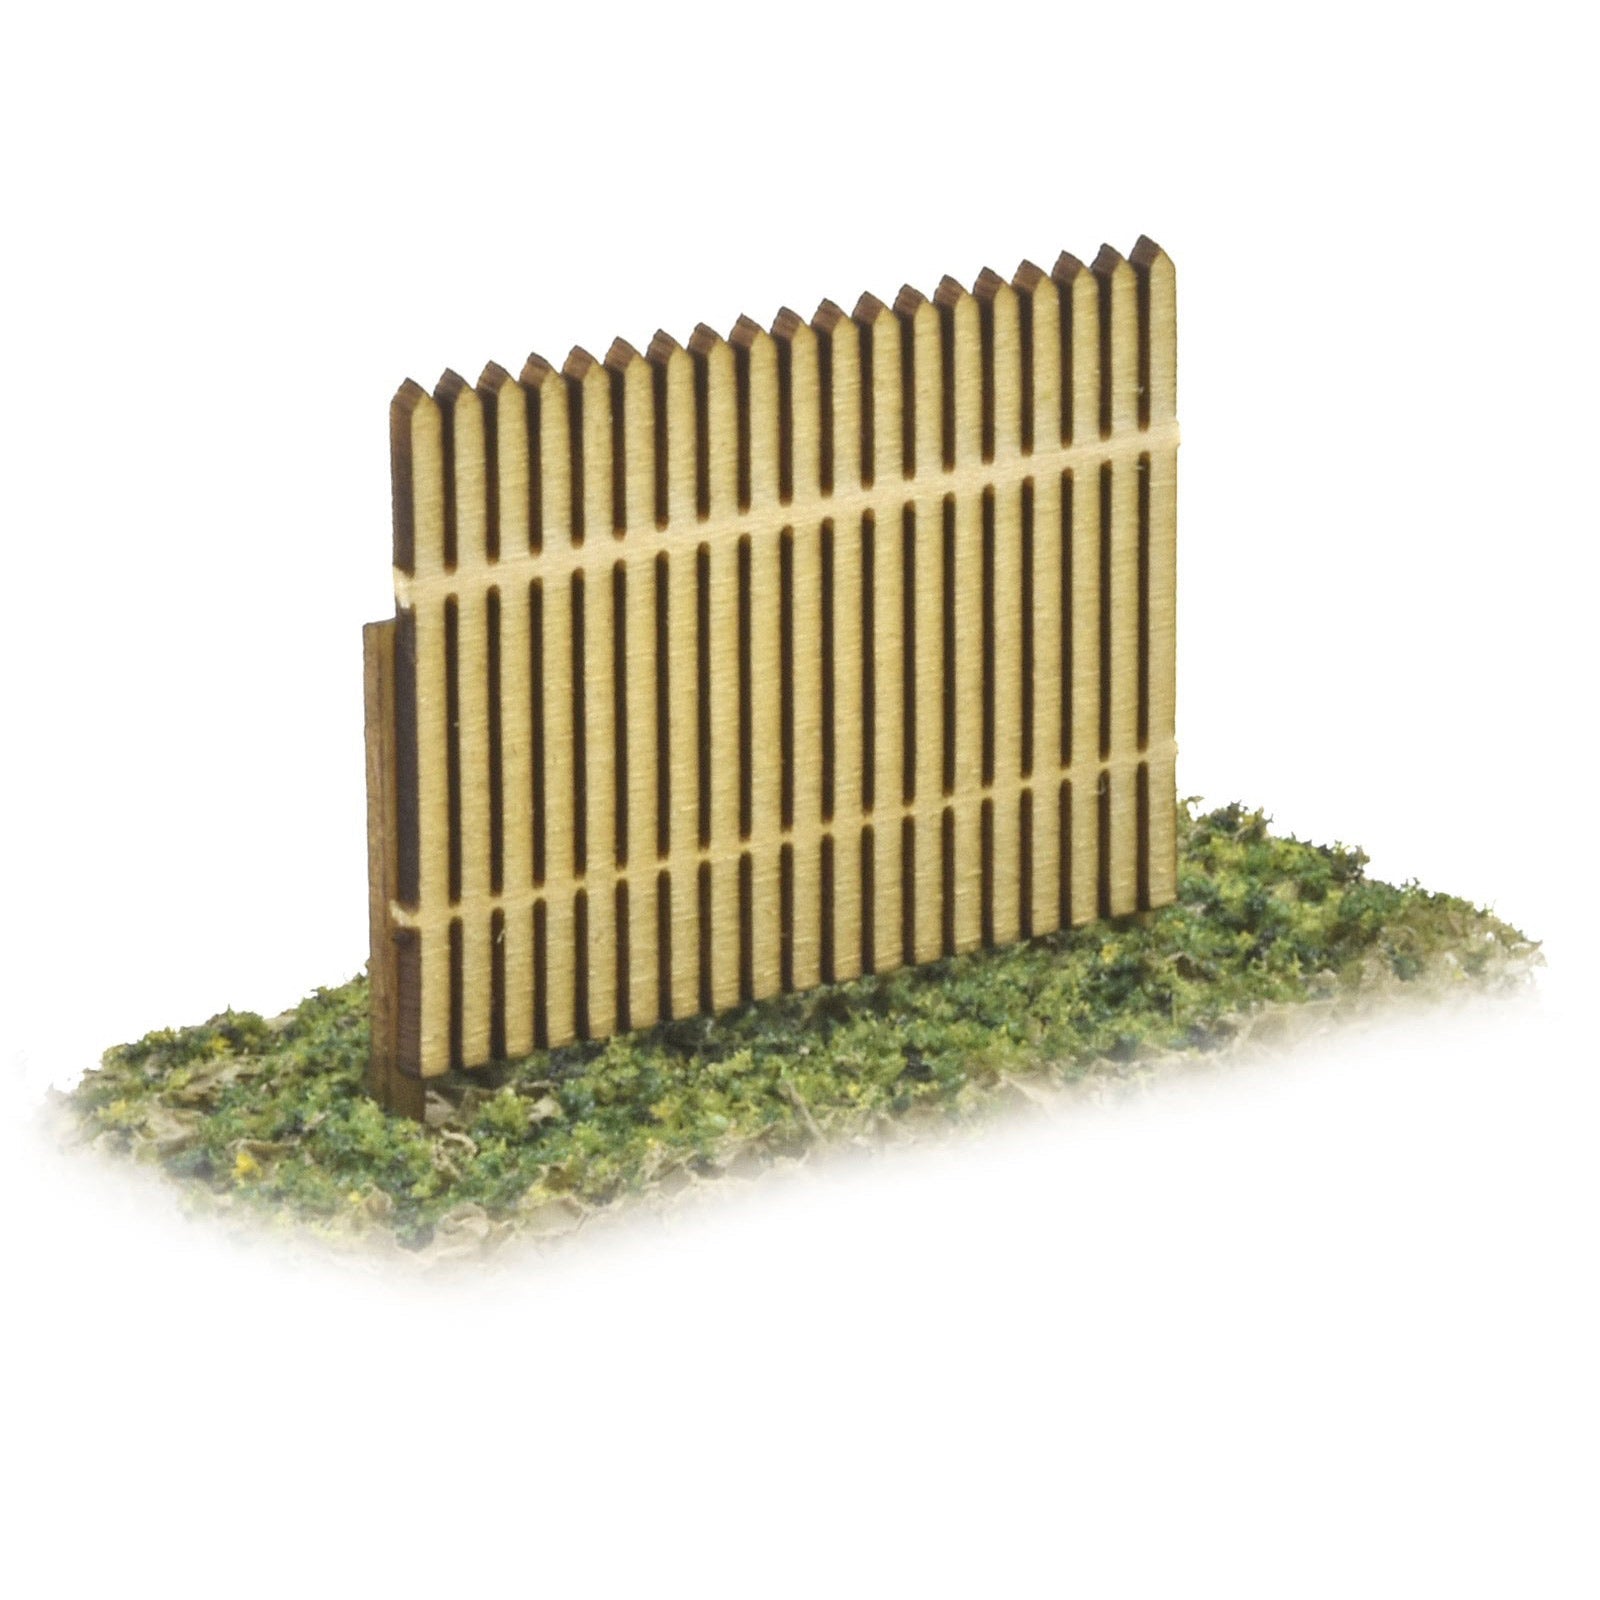 Picket Fence for Model Railroads, HO Scale, By Scientific - Micro - Mark Laser Model Kits